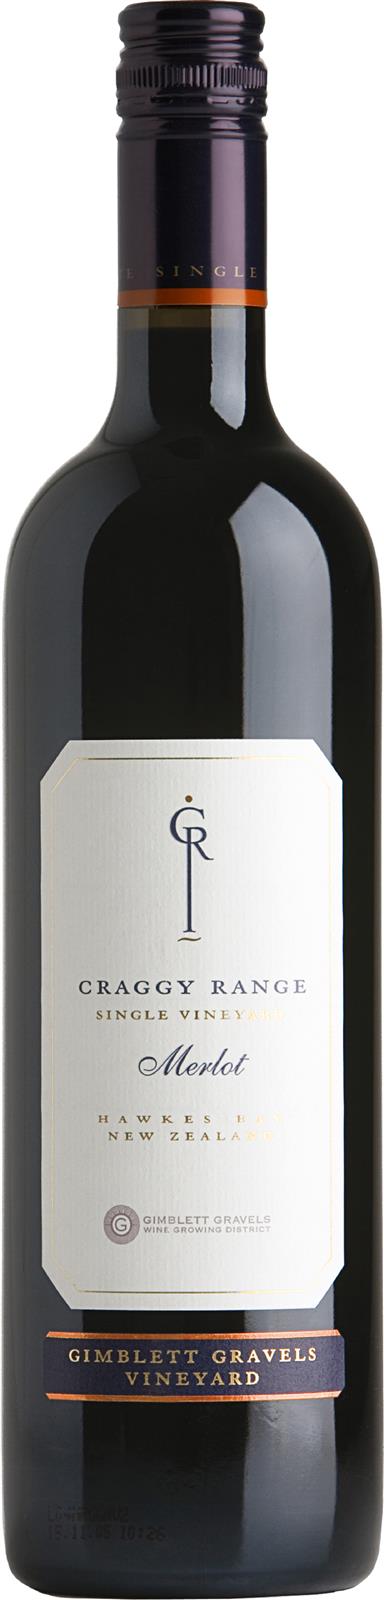 Craggy Range Single Vineyard Gimblett Gravels Vineyard Hawkes Bay Merlot 2016